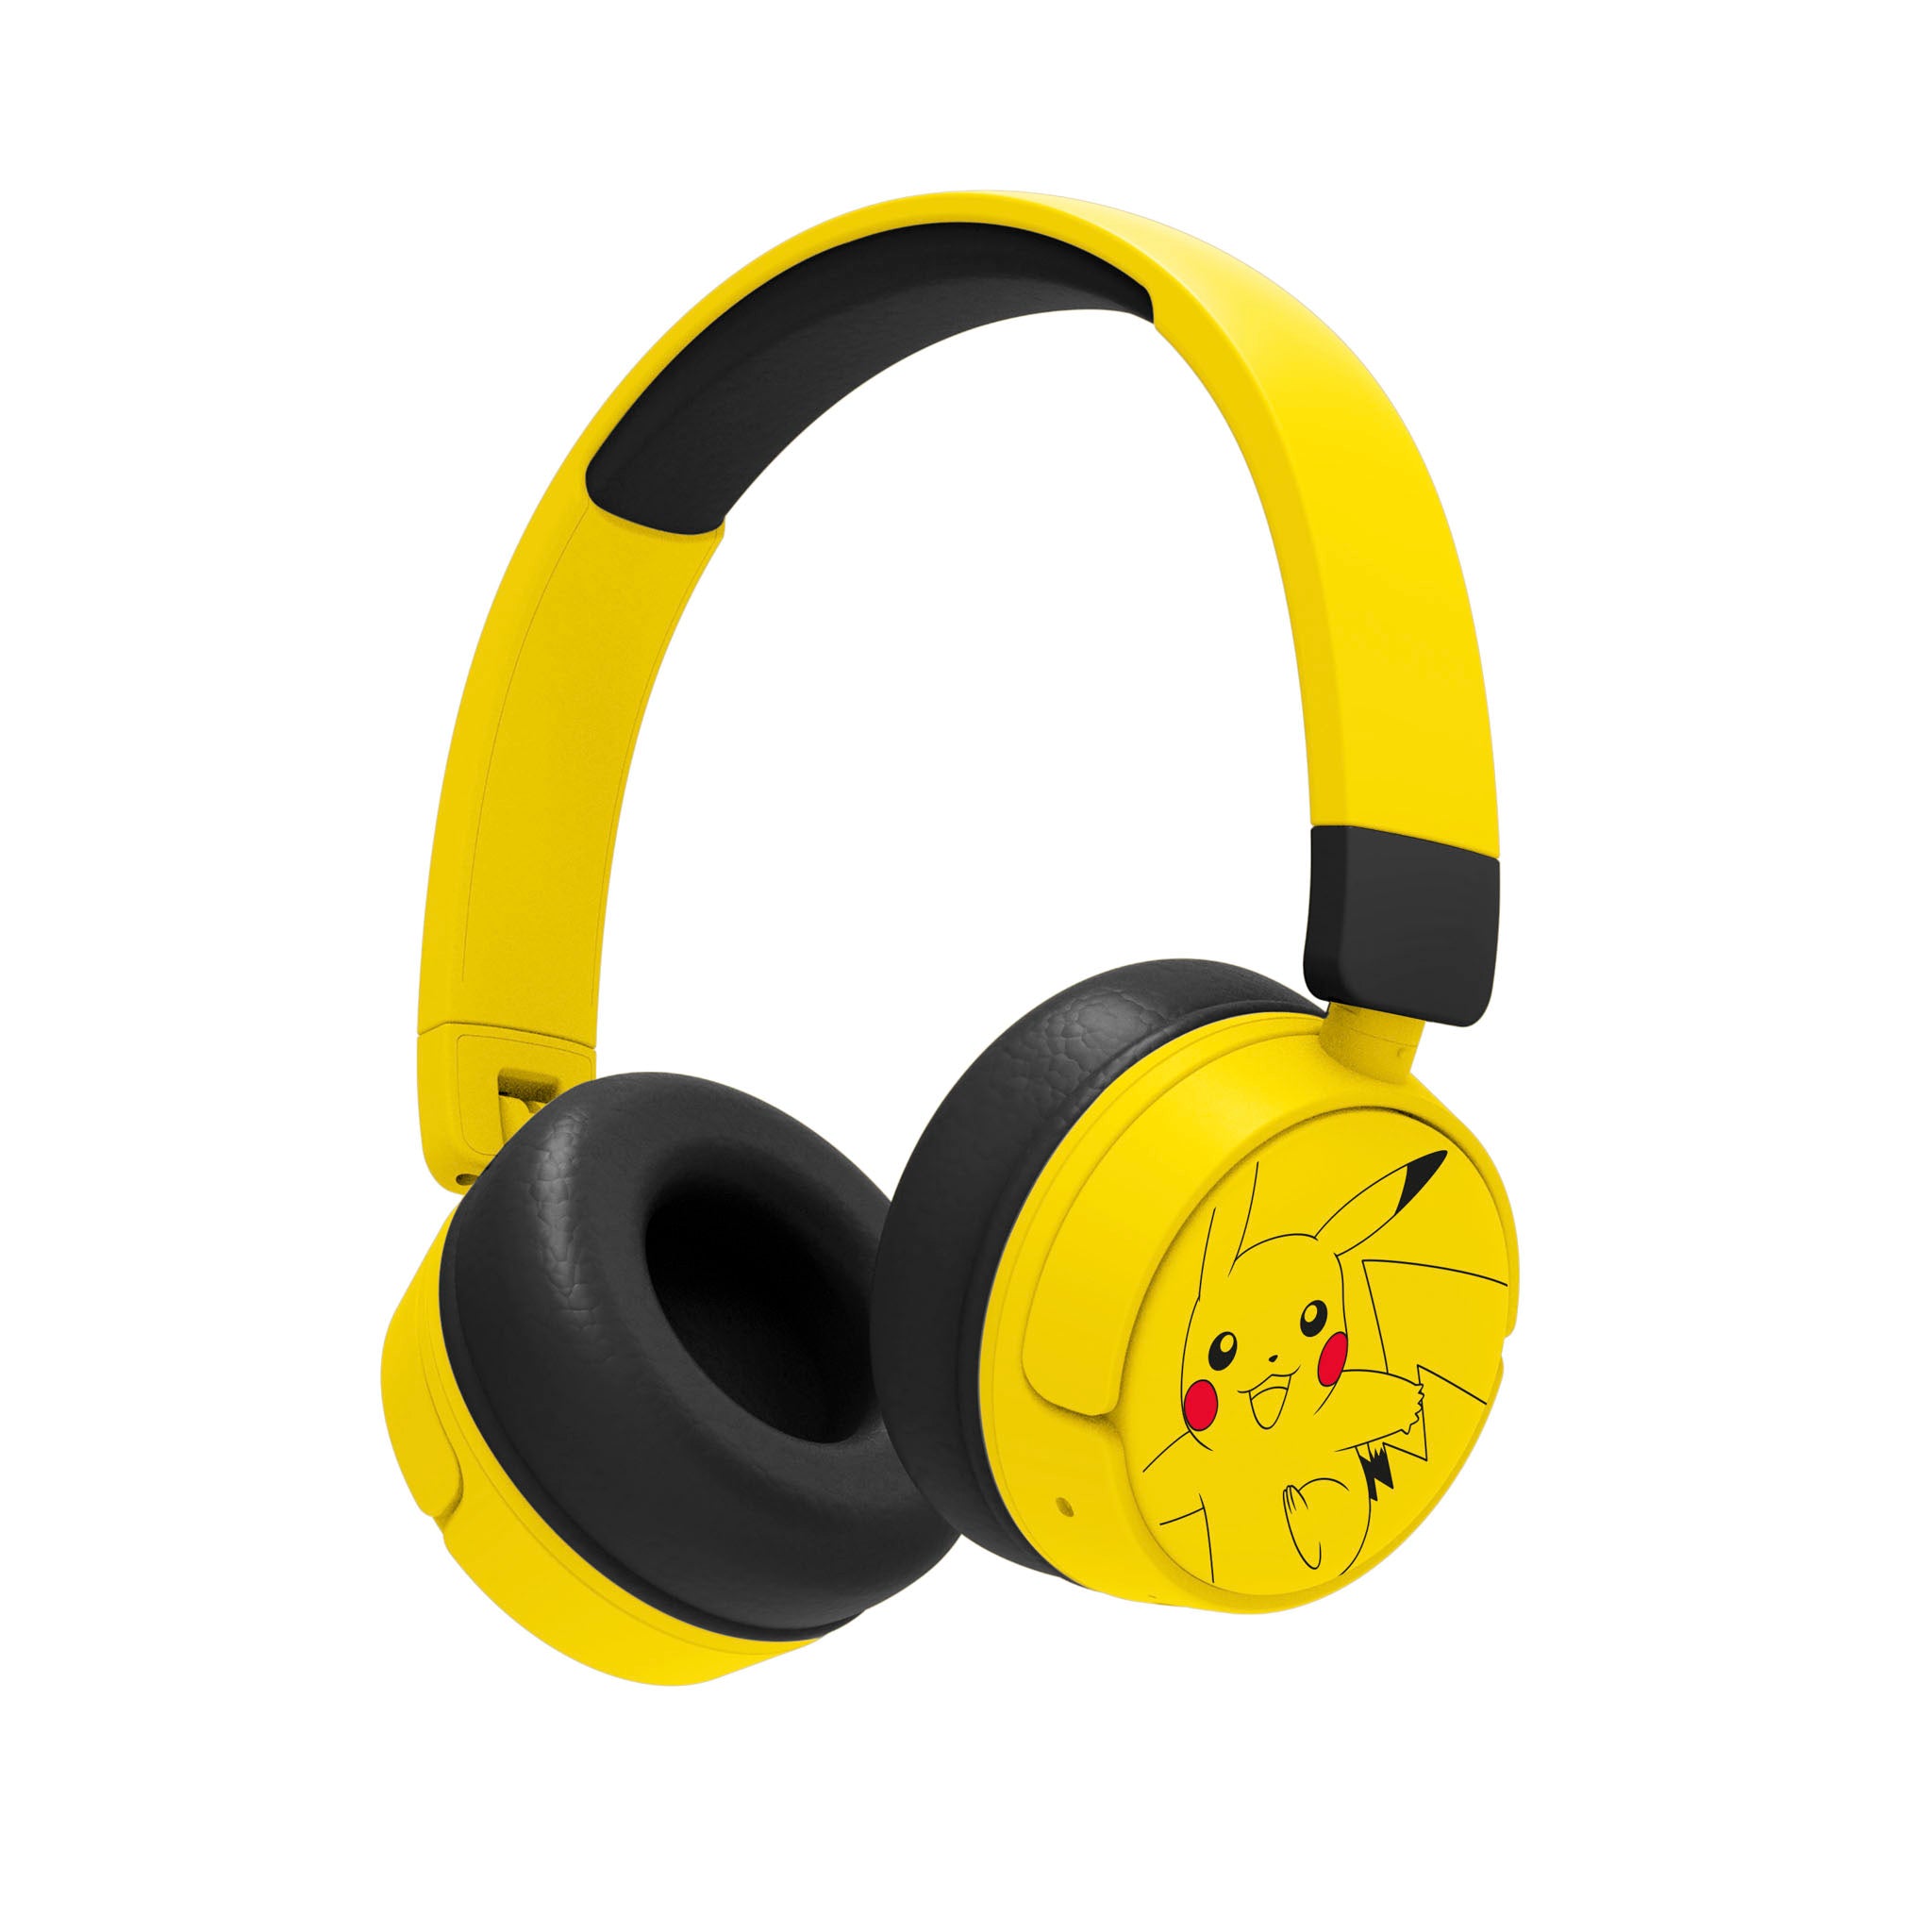 Pokémon Pikachu Kids Wireless Headphones PK1315 - Yellow